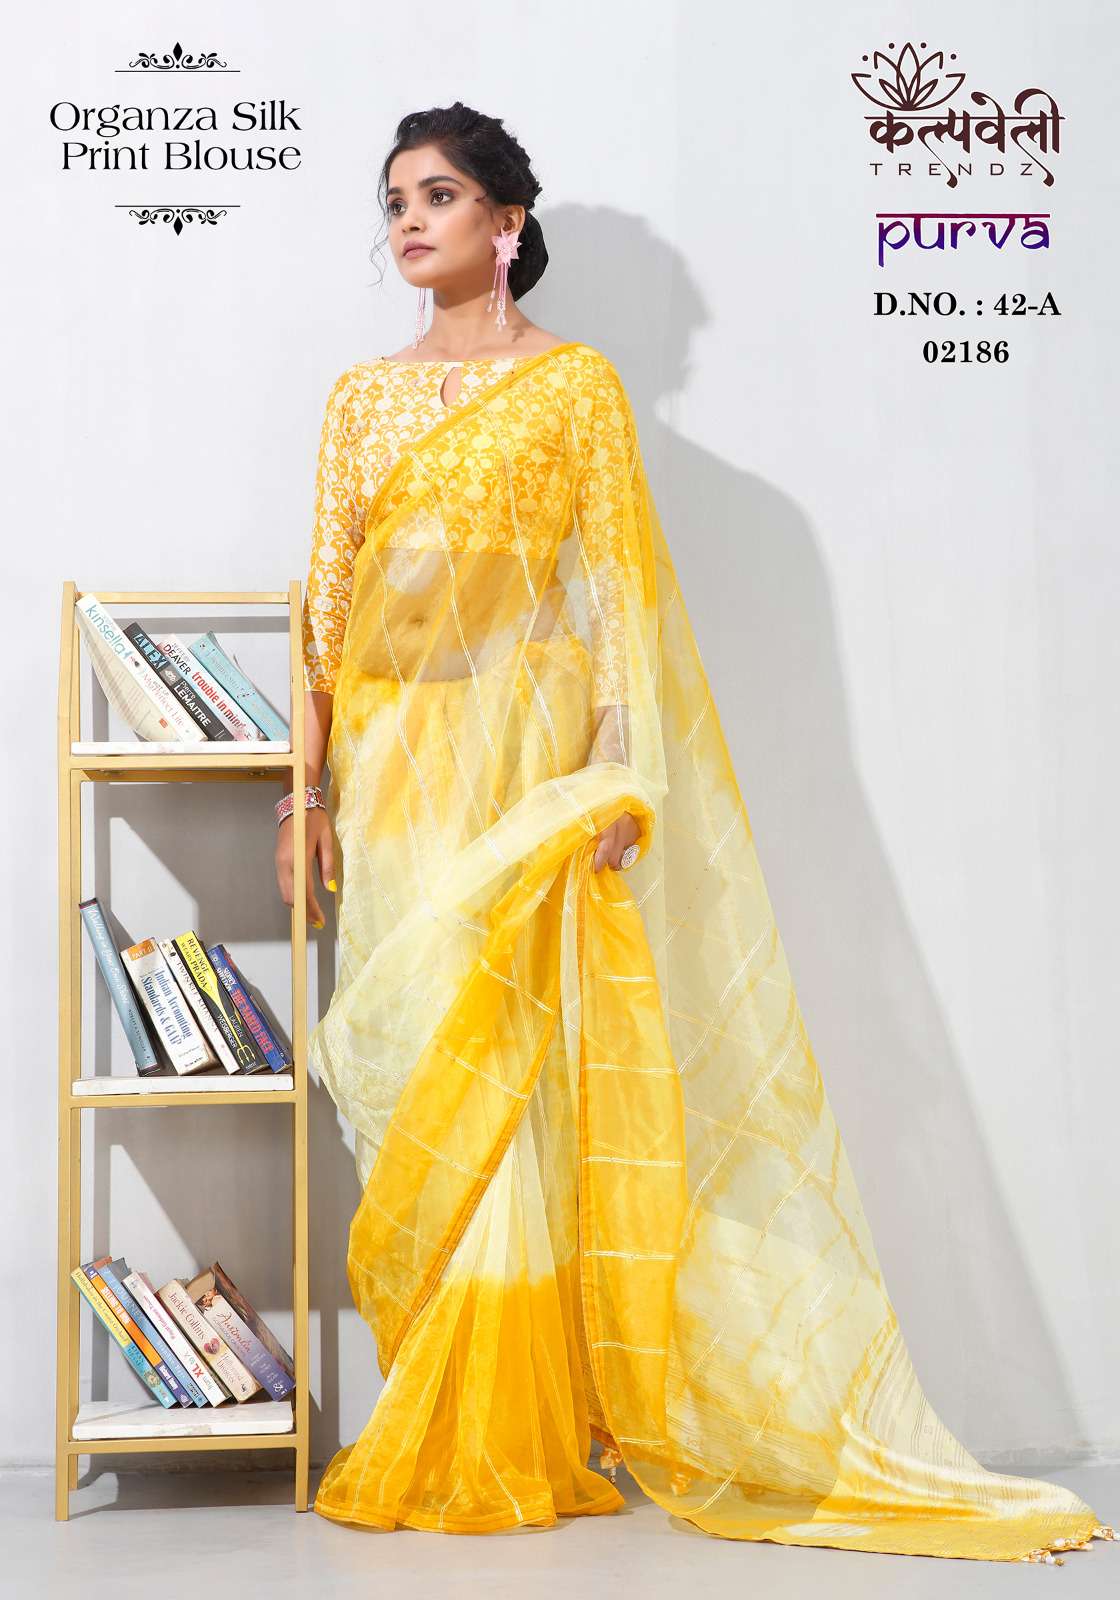 kalpvalley trendz present purva 42 organza silk fancy saree catalog